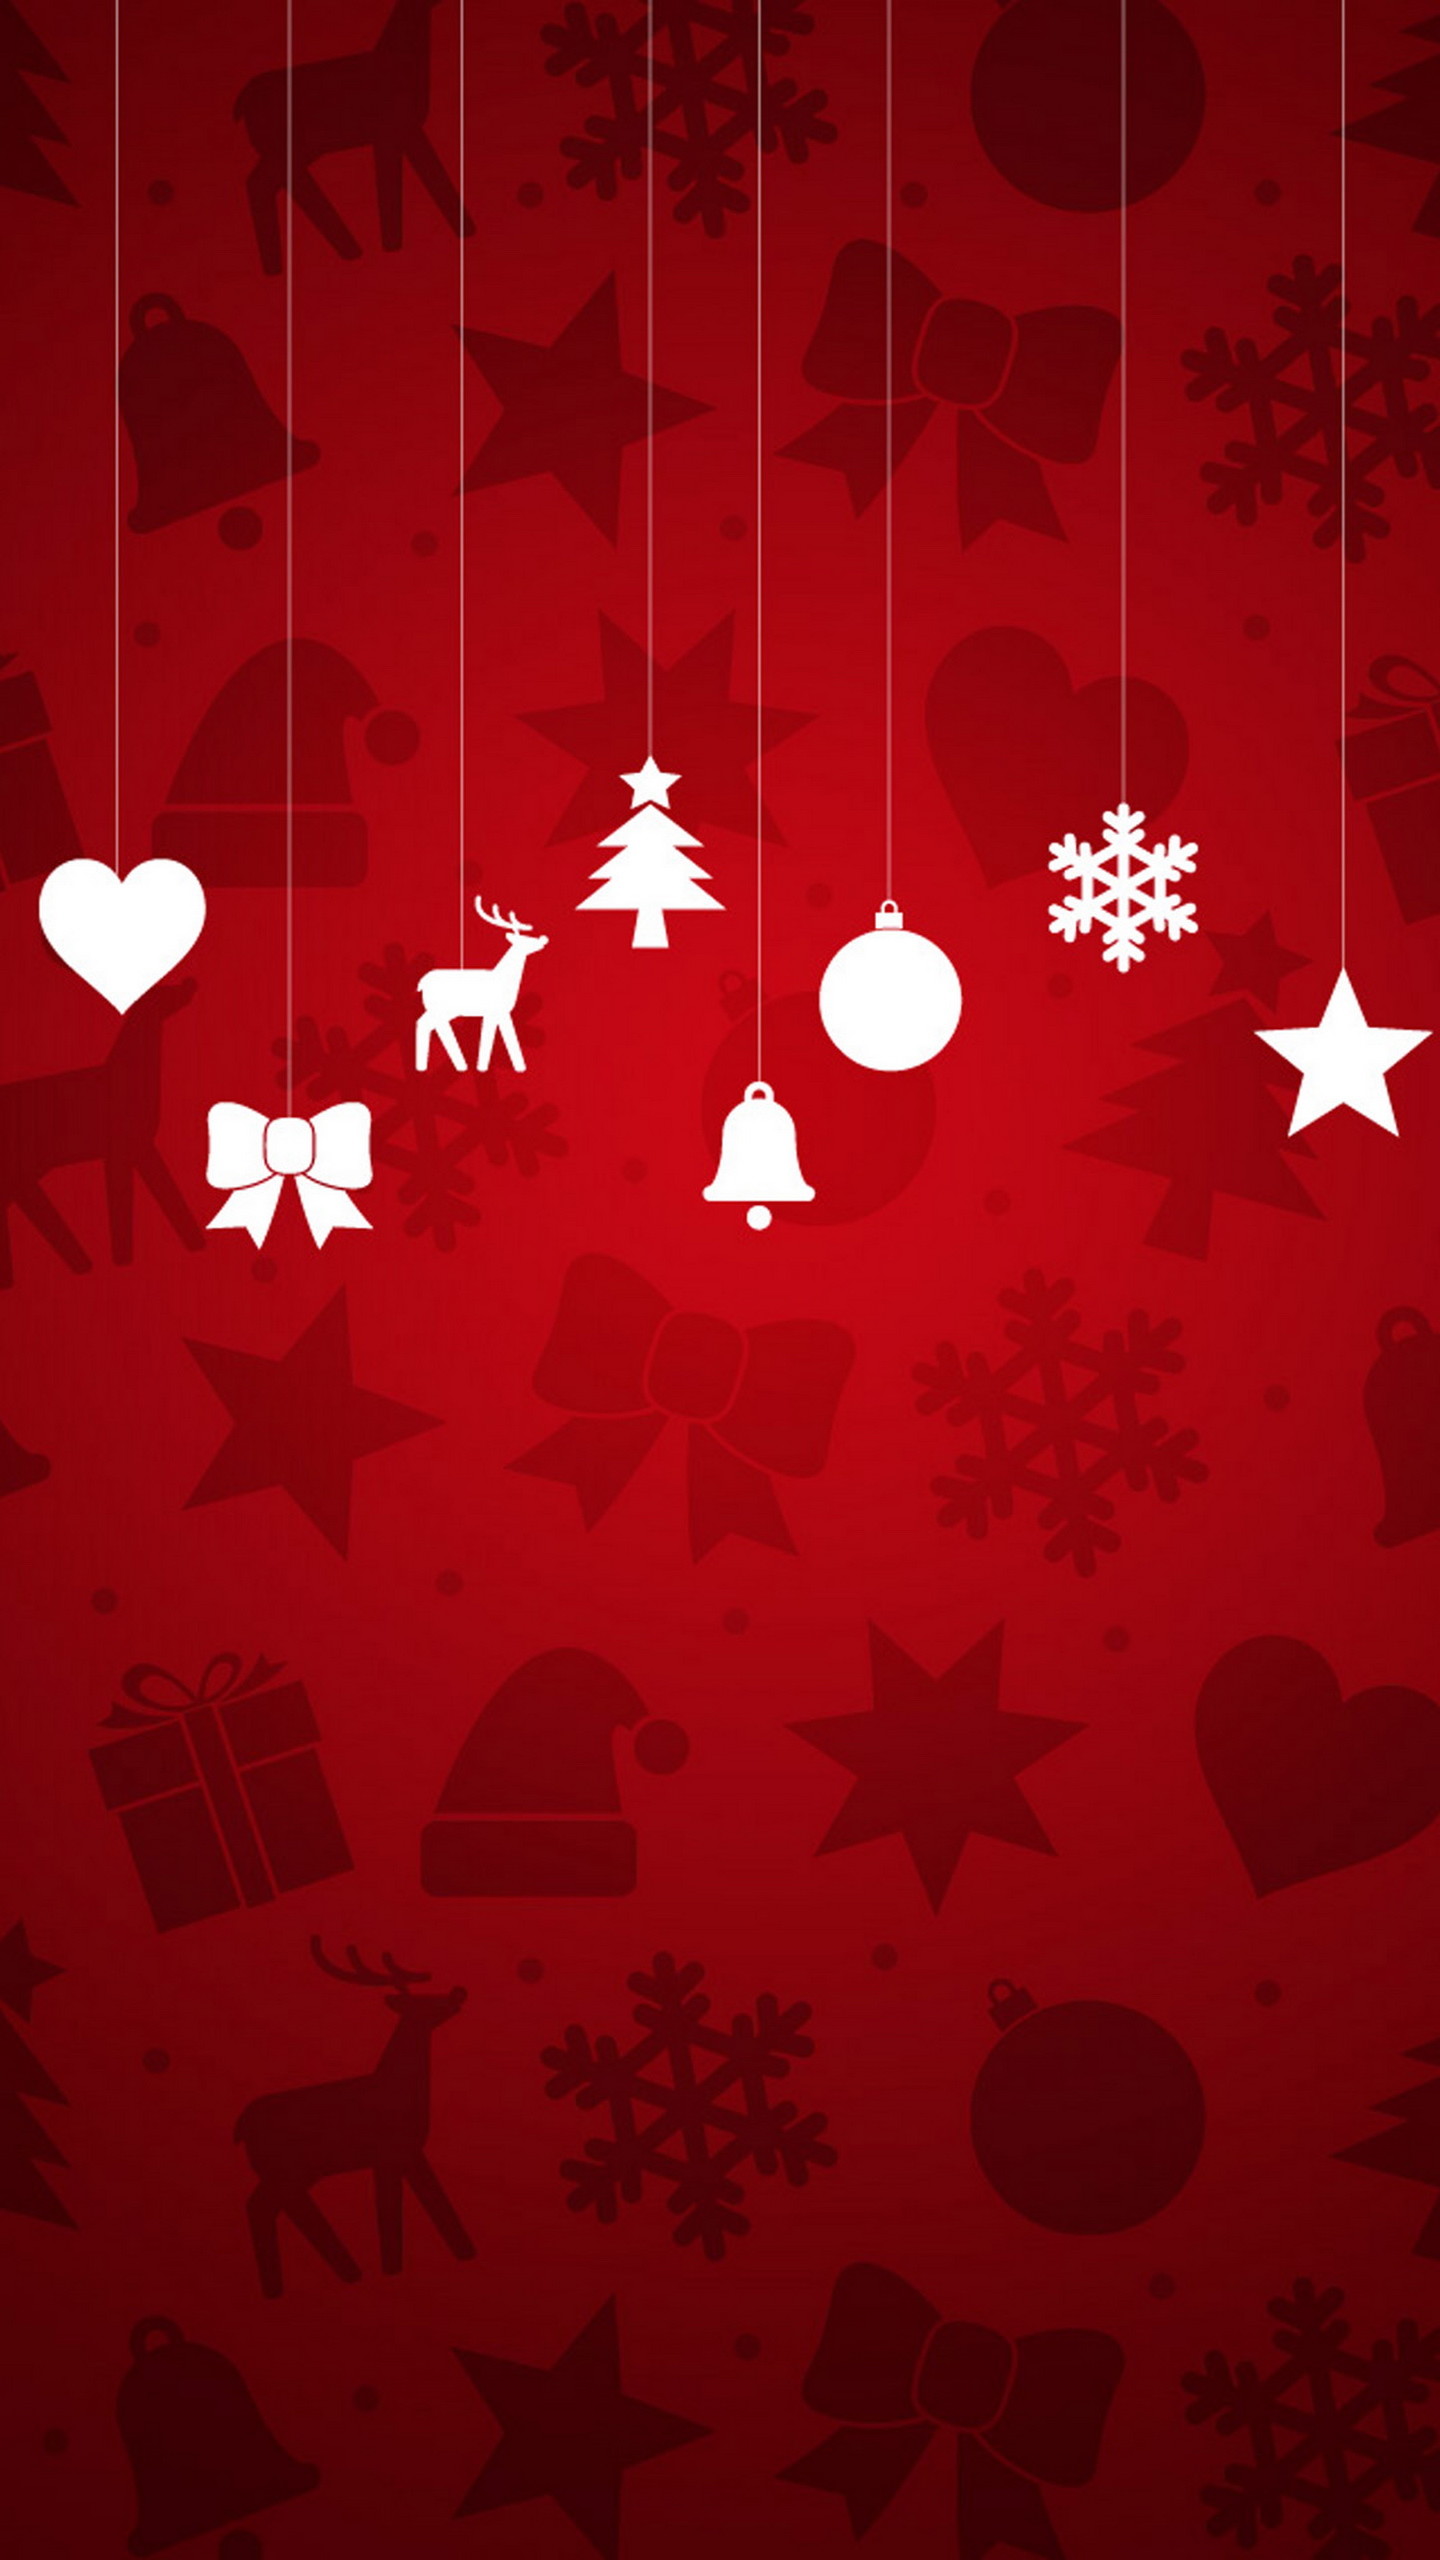 1440x2560 Samsung Galaxy Wallpaper Christmas | Minimal Christmas Ornaments Red  Background Galaxy Note 4 Wallpaper .